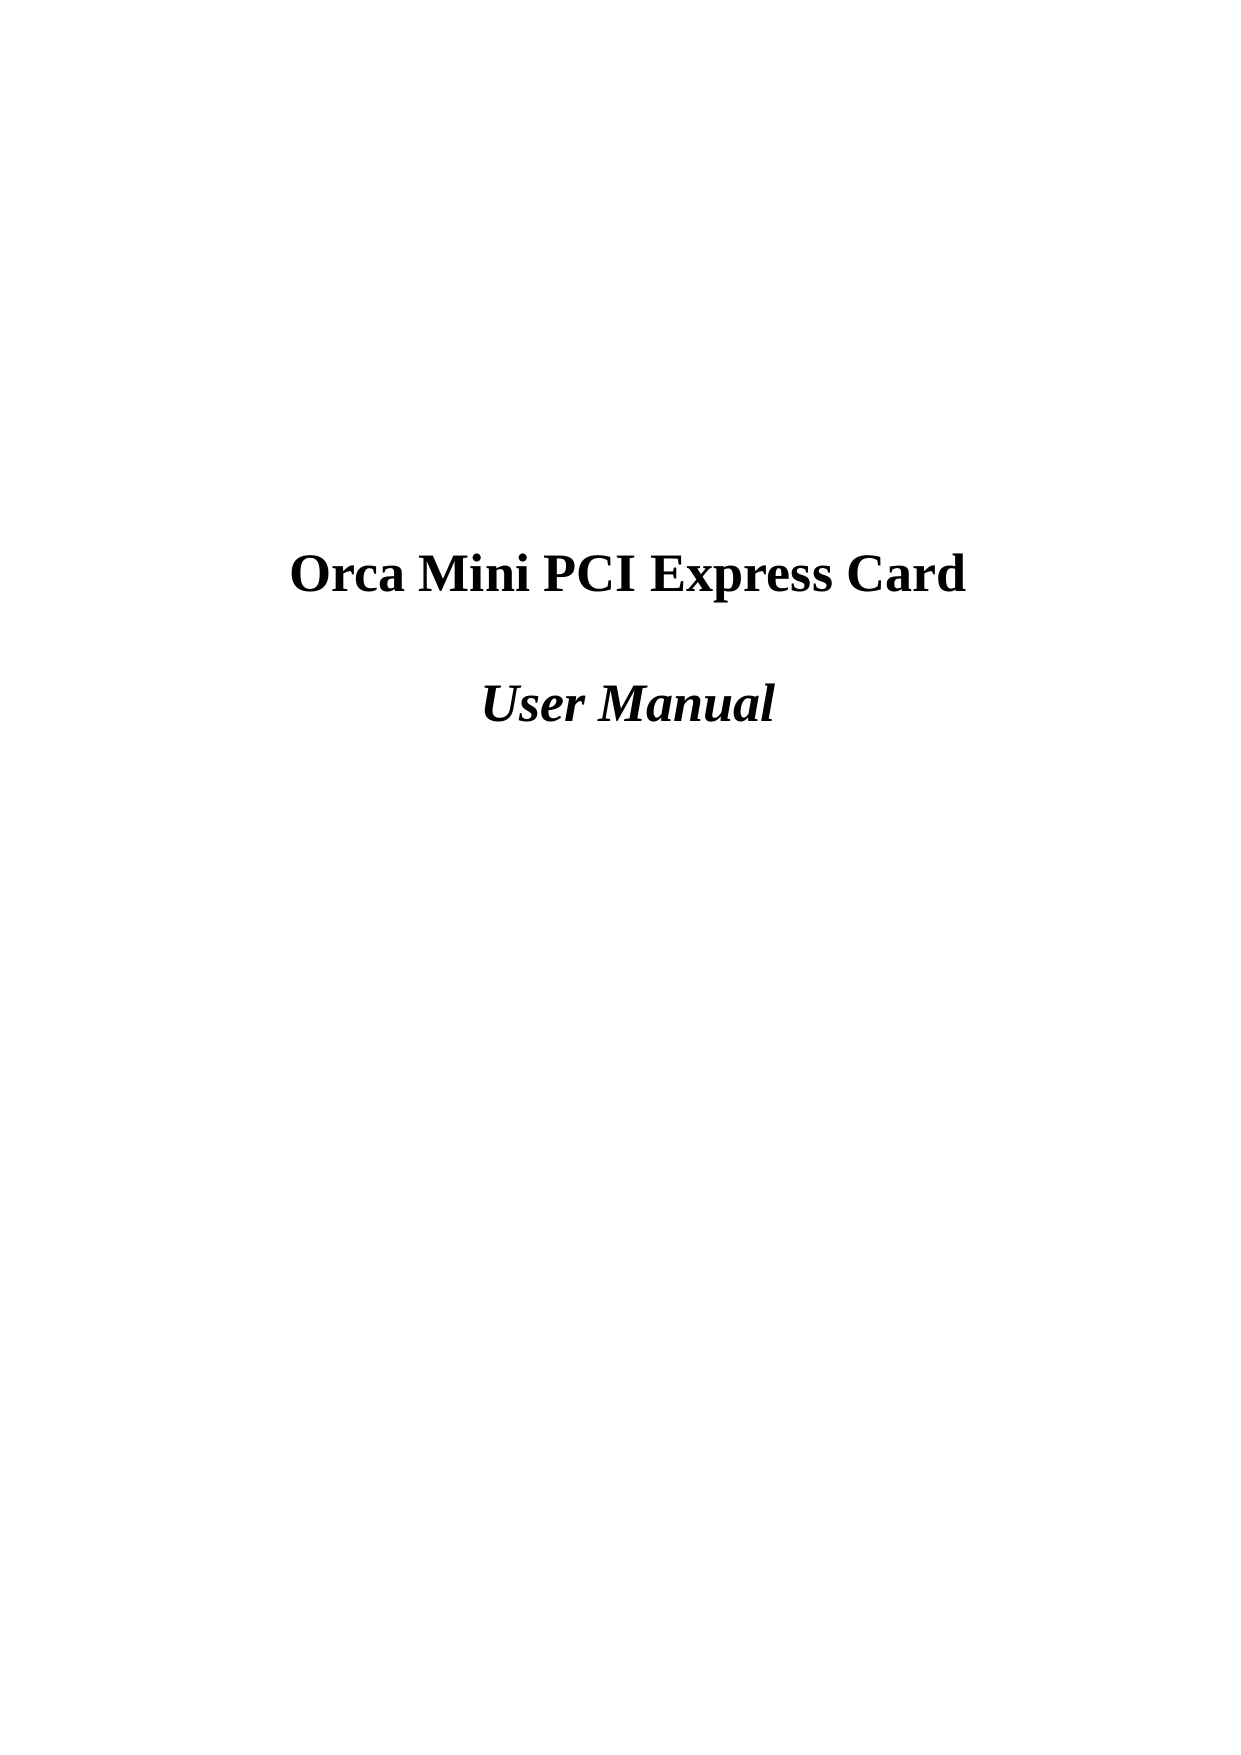       Orca Mini PCI Express Card  User Manual 